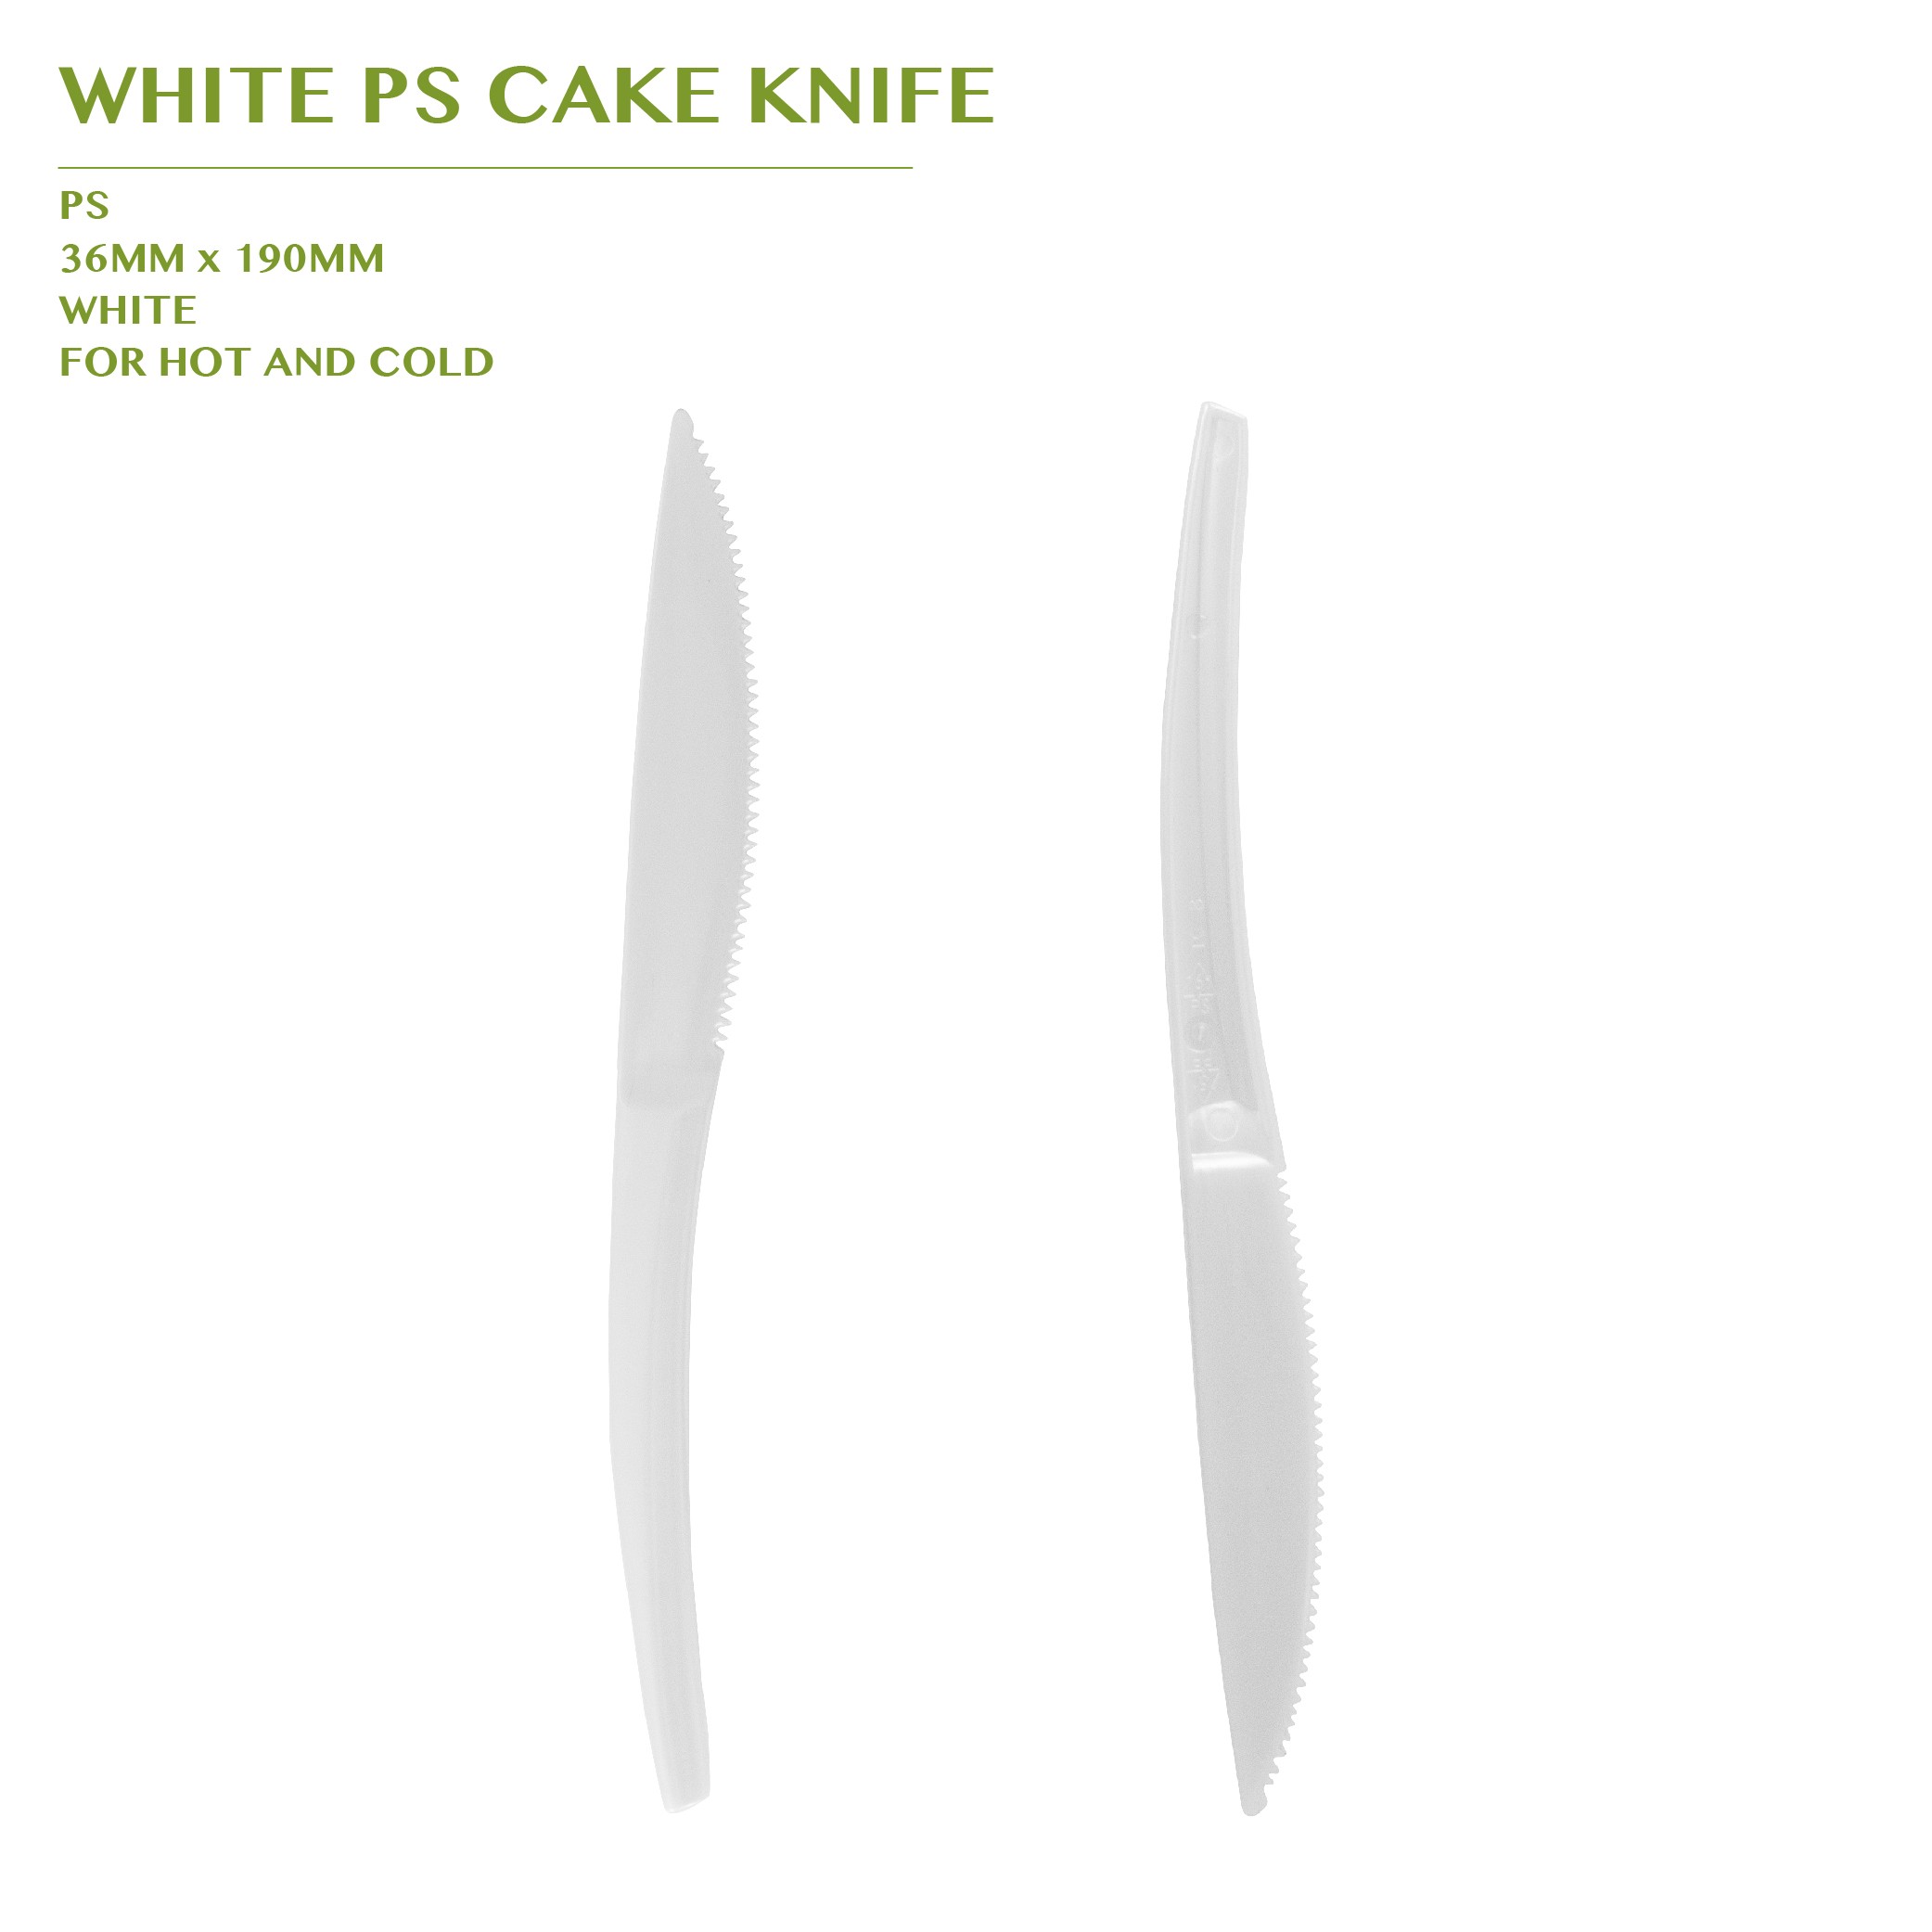 PRE-ORDER WHITE PS CAKE KNIFE 2000PCS/CTN